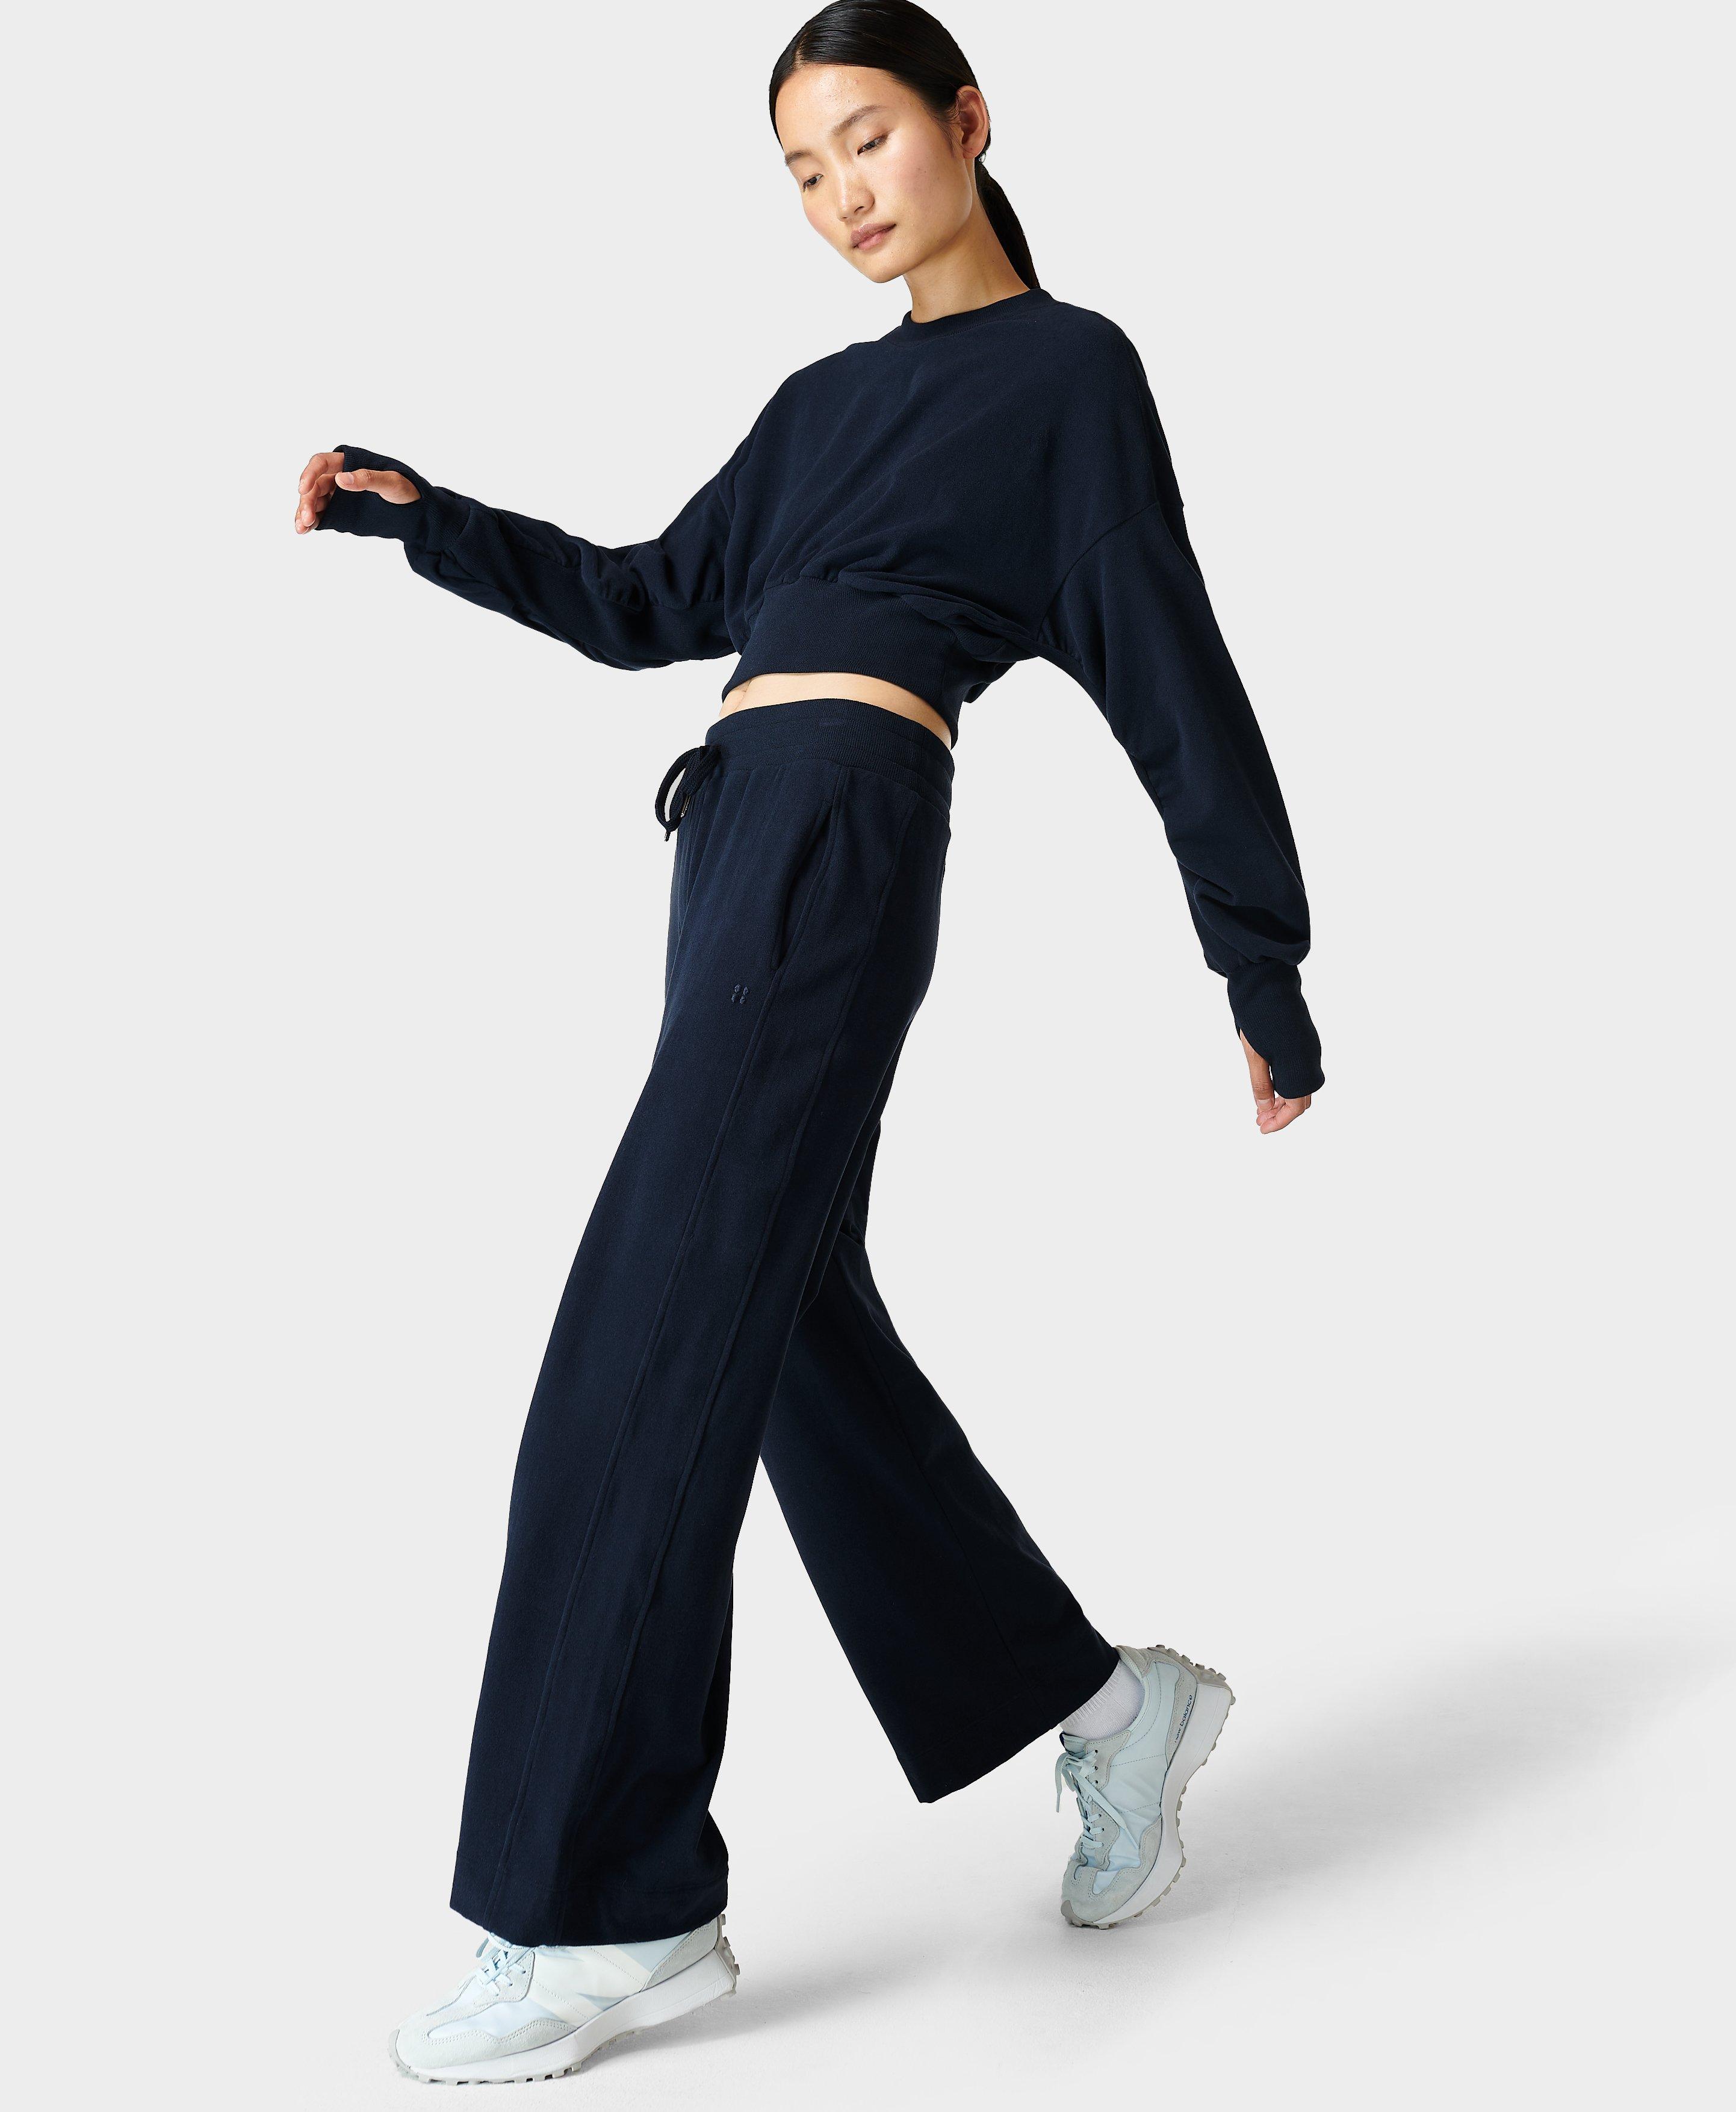 Serene Luxe Fleece Pants - 32 INSEAM, Women's Trousers & Yoga Pants